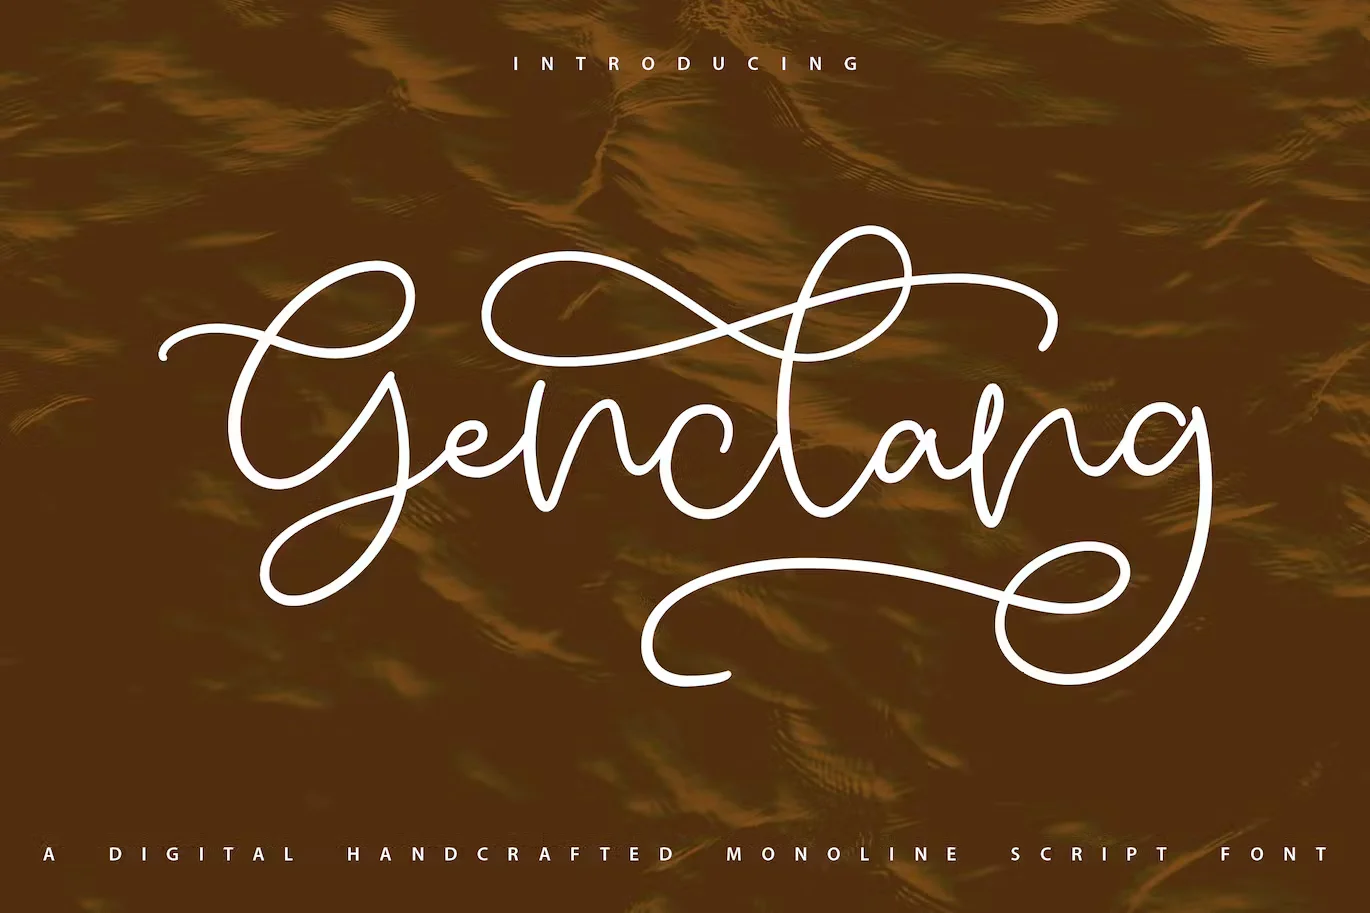 Genclang | Handcrafted Monoline Script Font